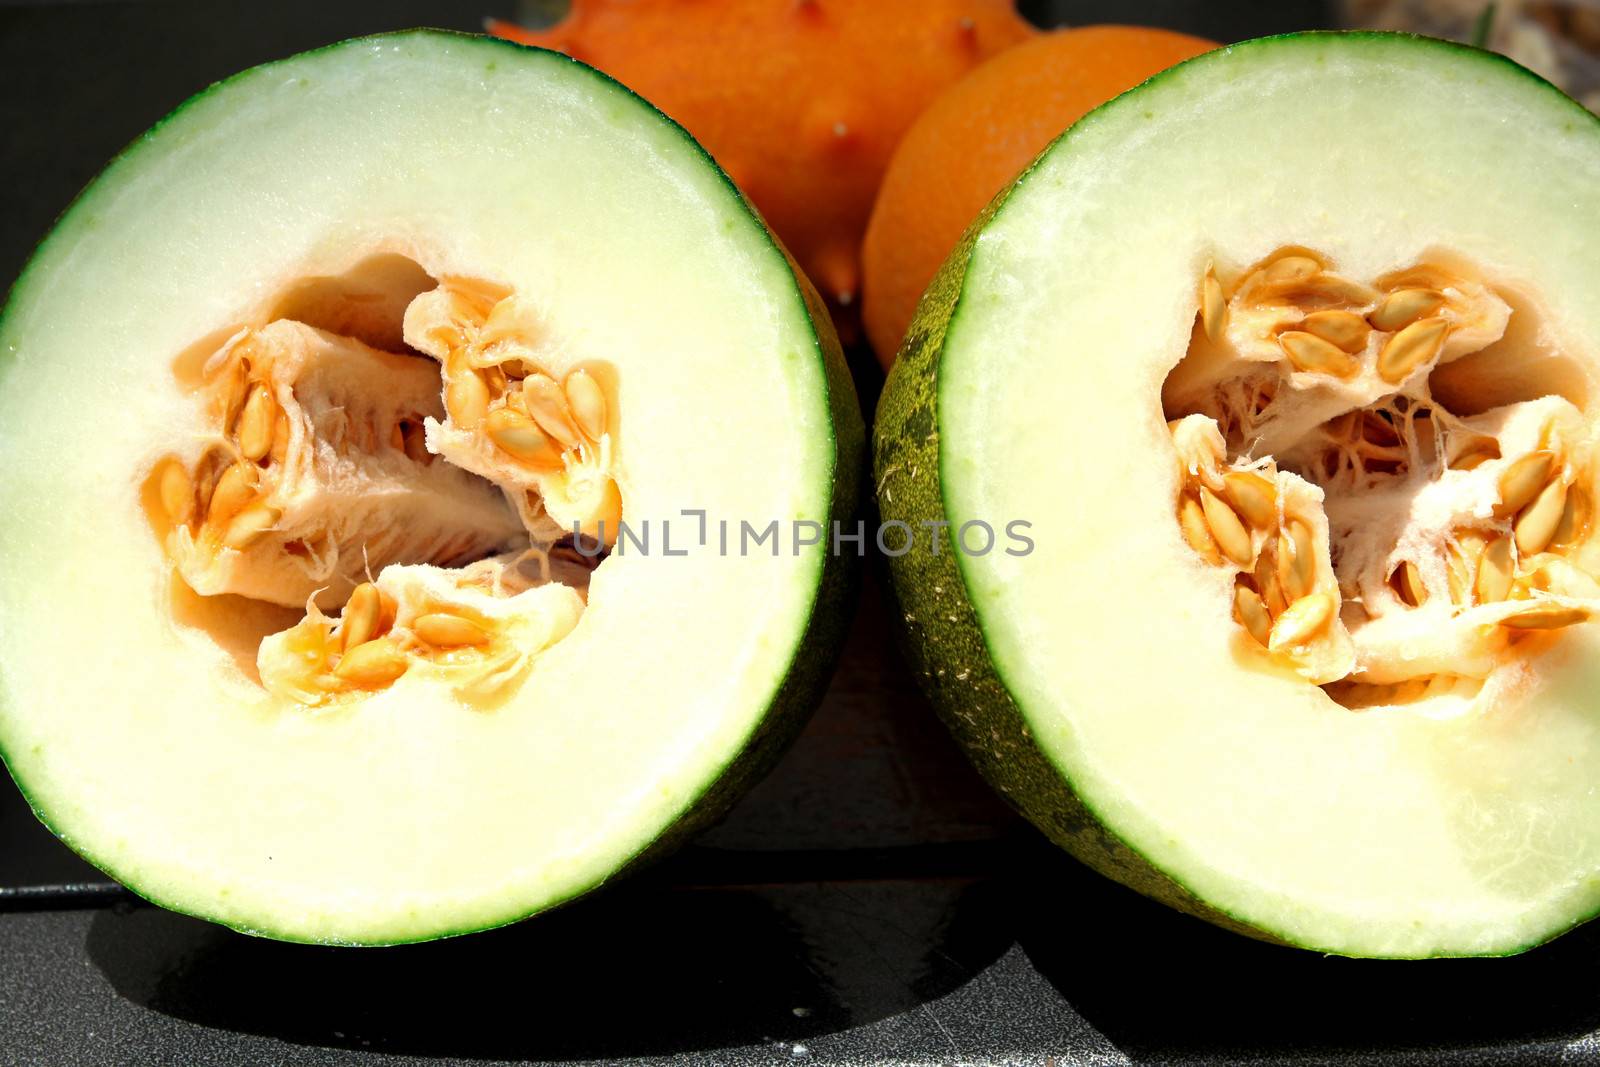 Exotic fruits: melon, kiwano and orange by evp82